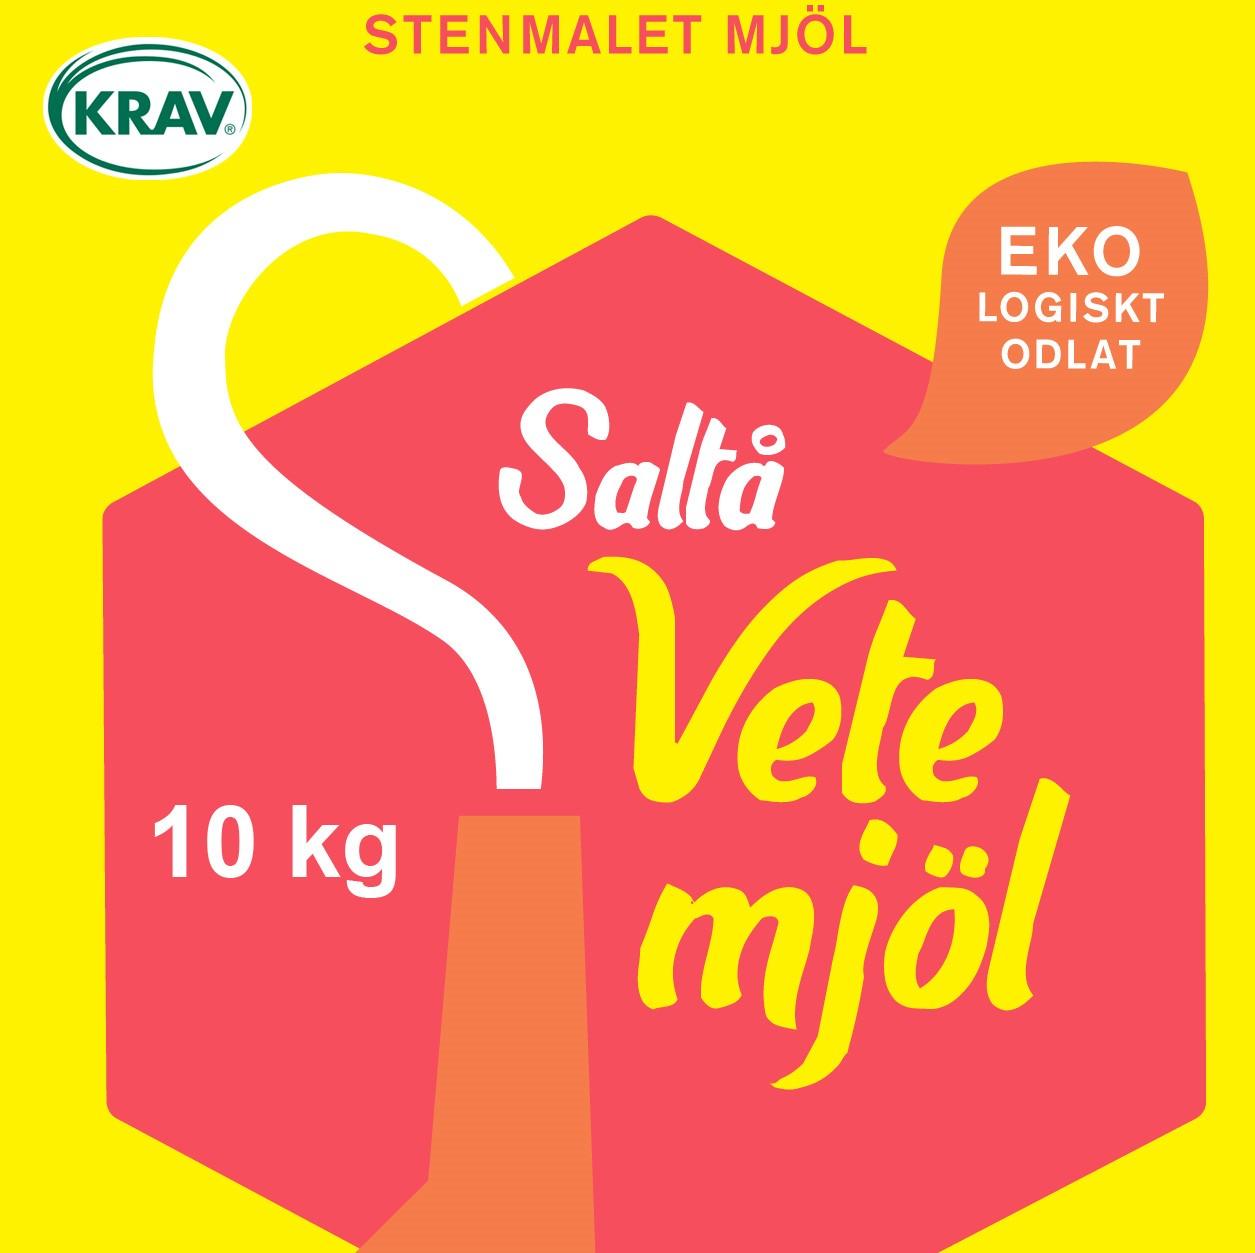 Saltå Kvarn's Wheat Flour '